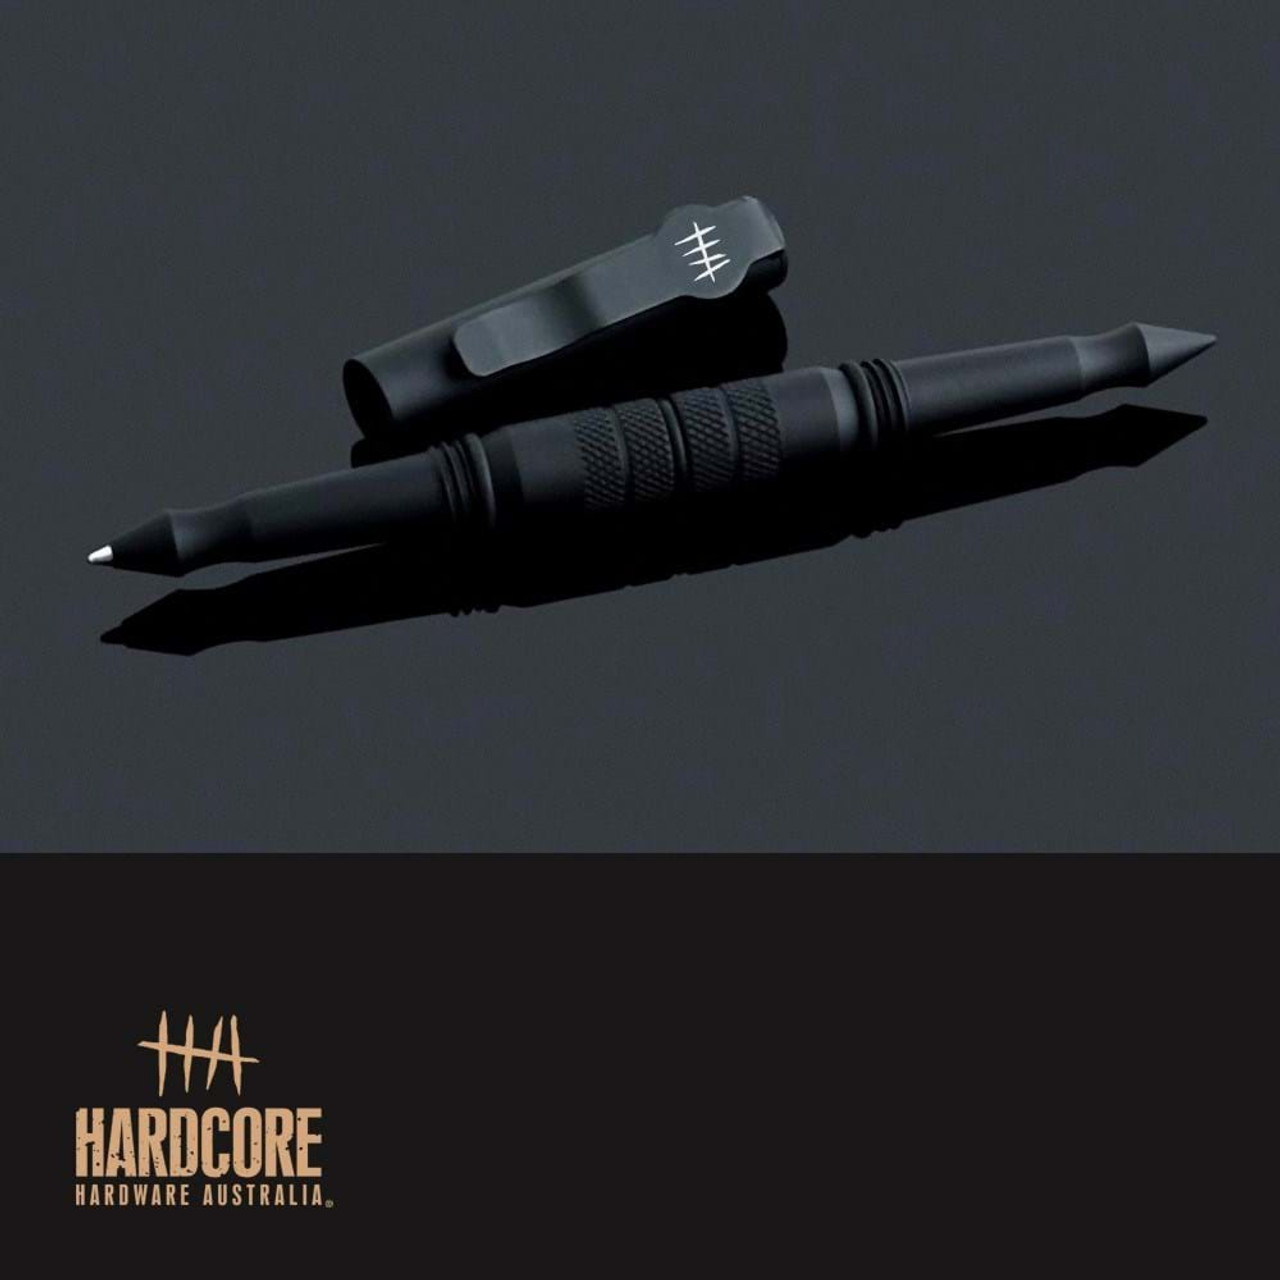 Hardcore Hardware Australia Tactical Pen (TWI01) 5.74" Black Non-Reflective Coated Aluminum Body and Cap